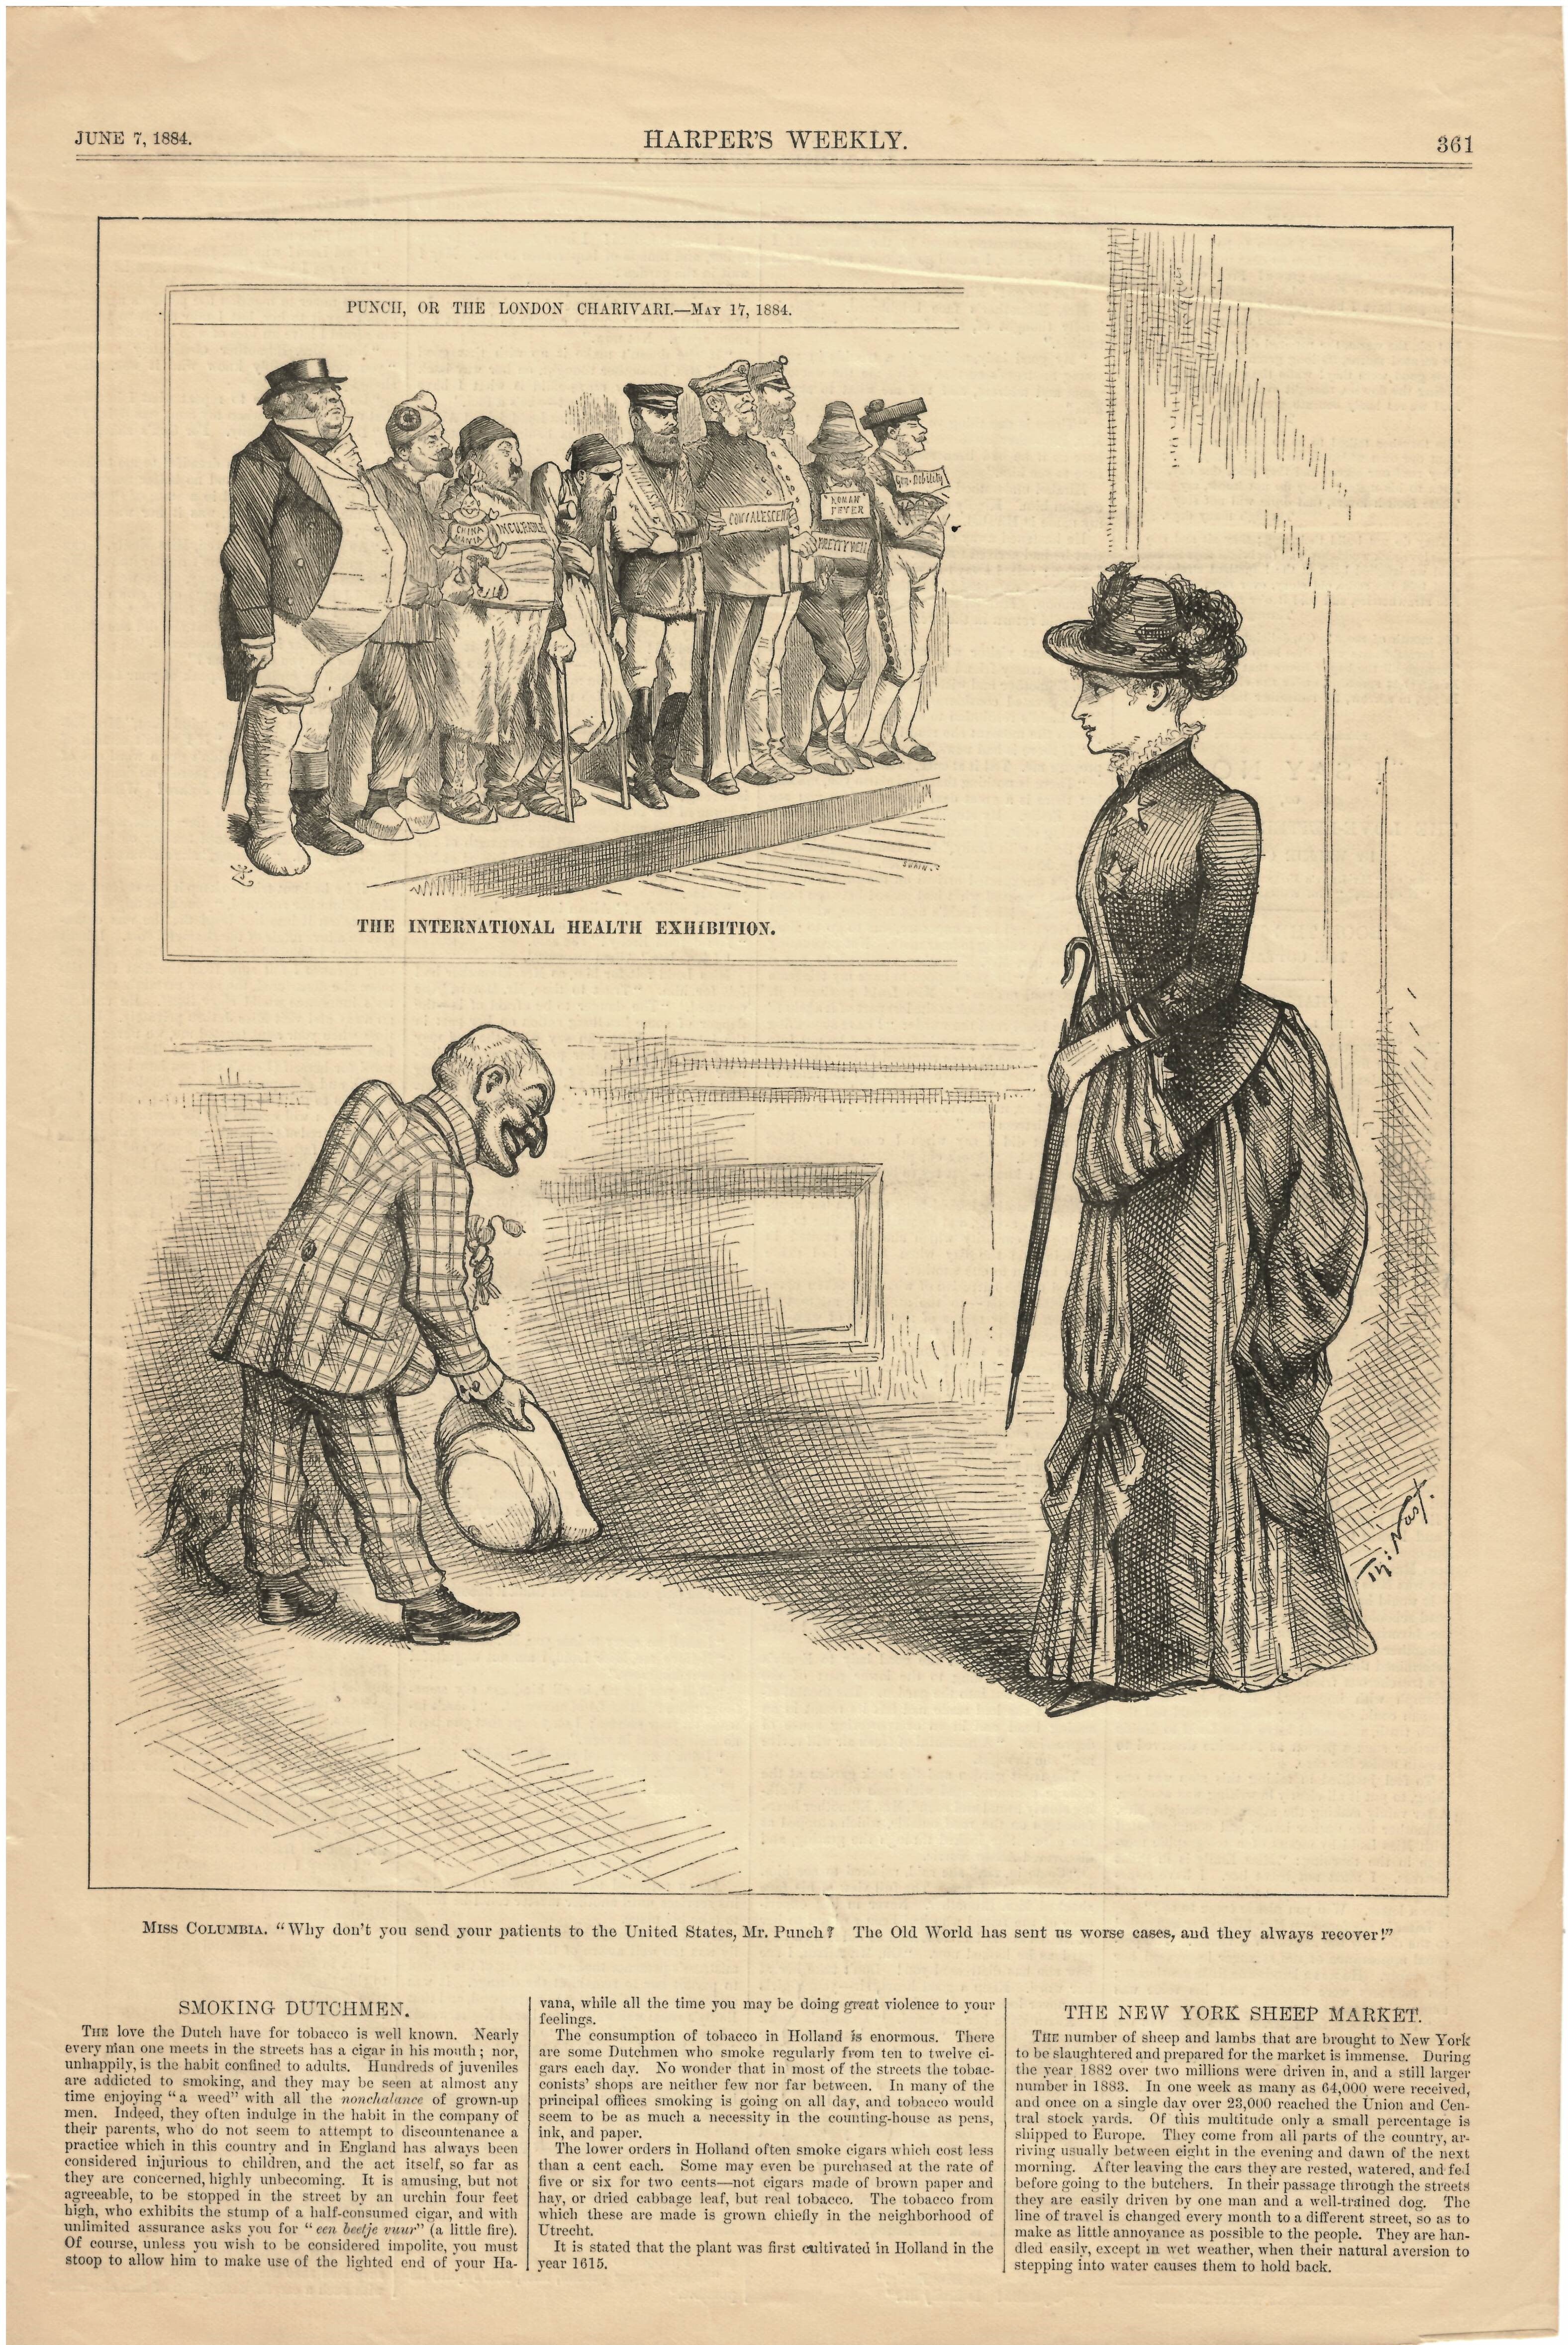 Harper's Weekly June 7, 1884 The International Health Exhibition Ad Print